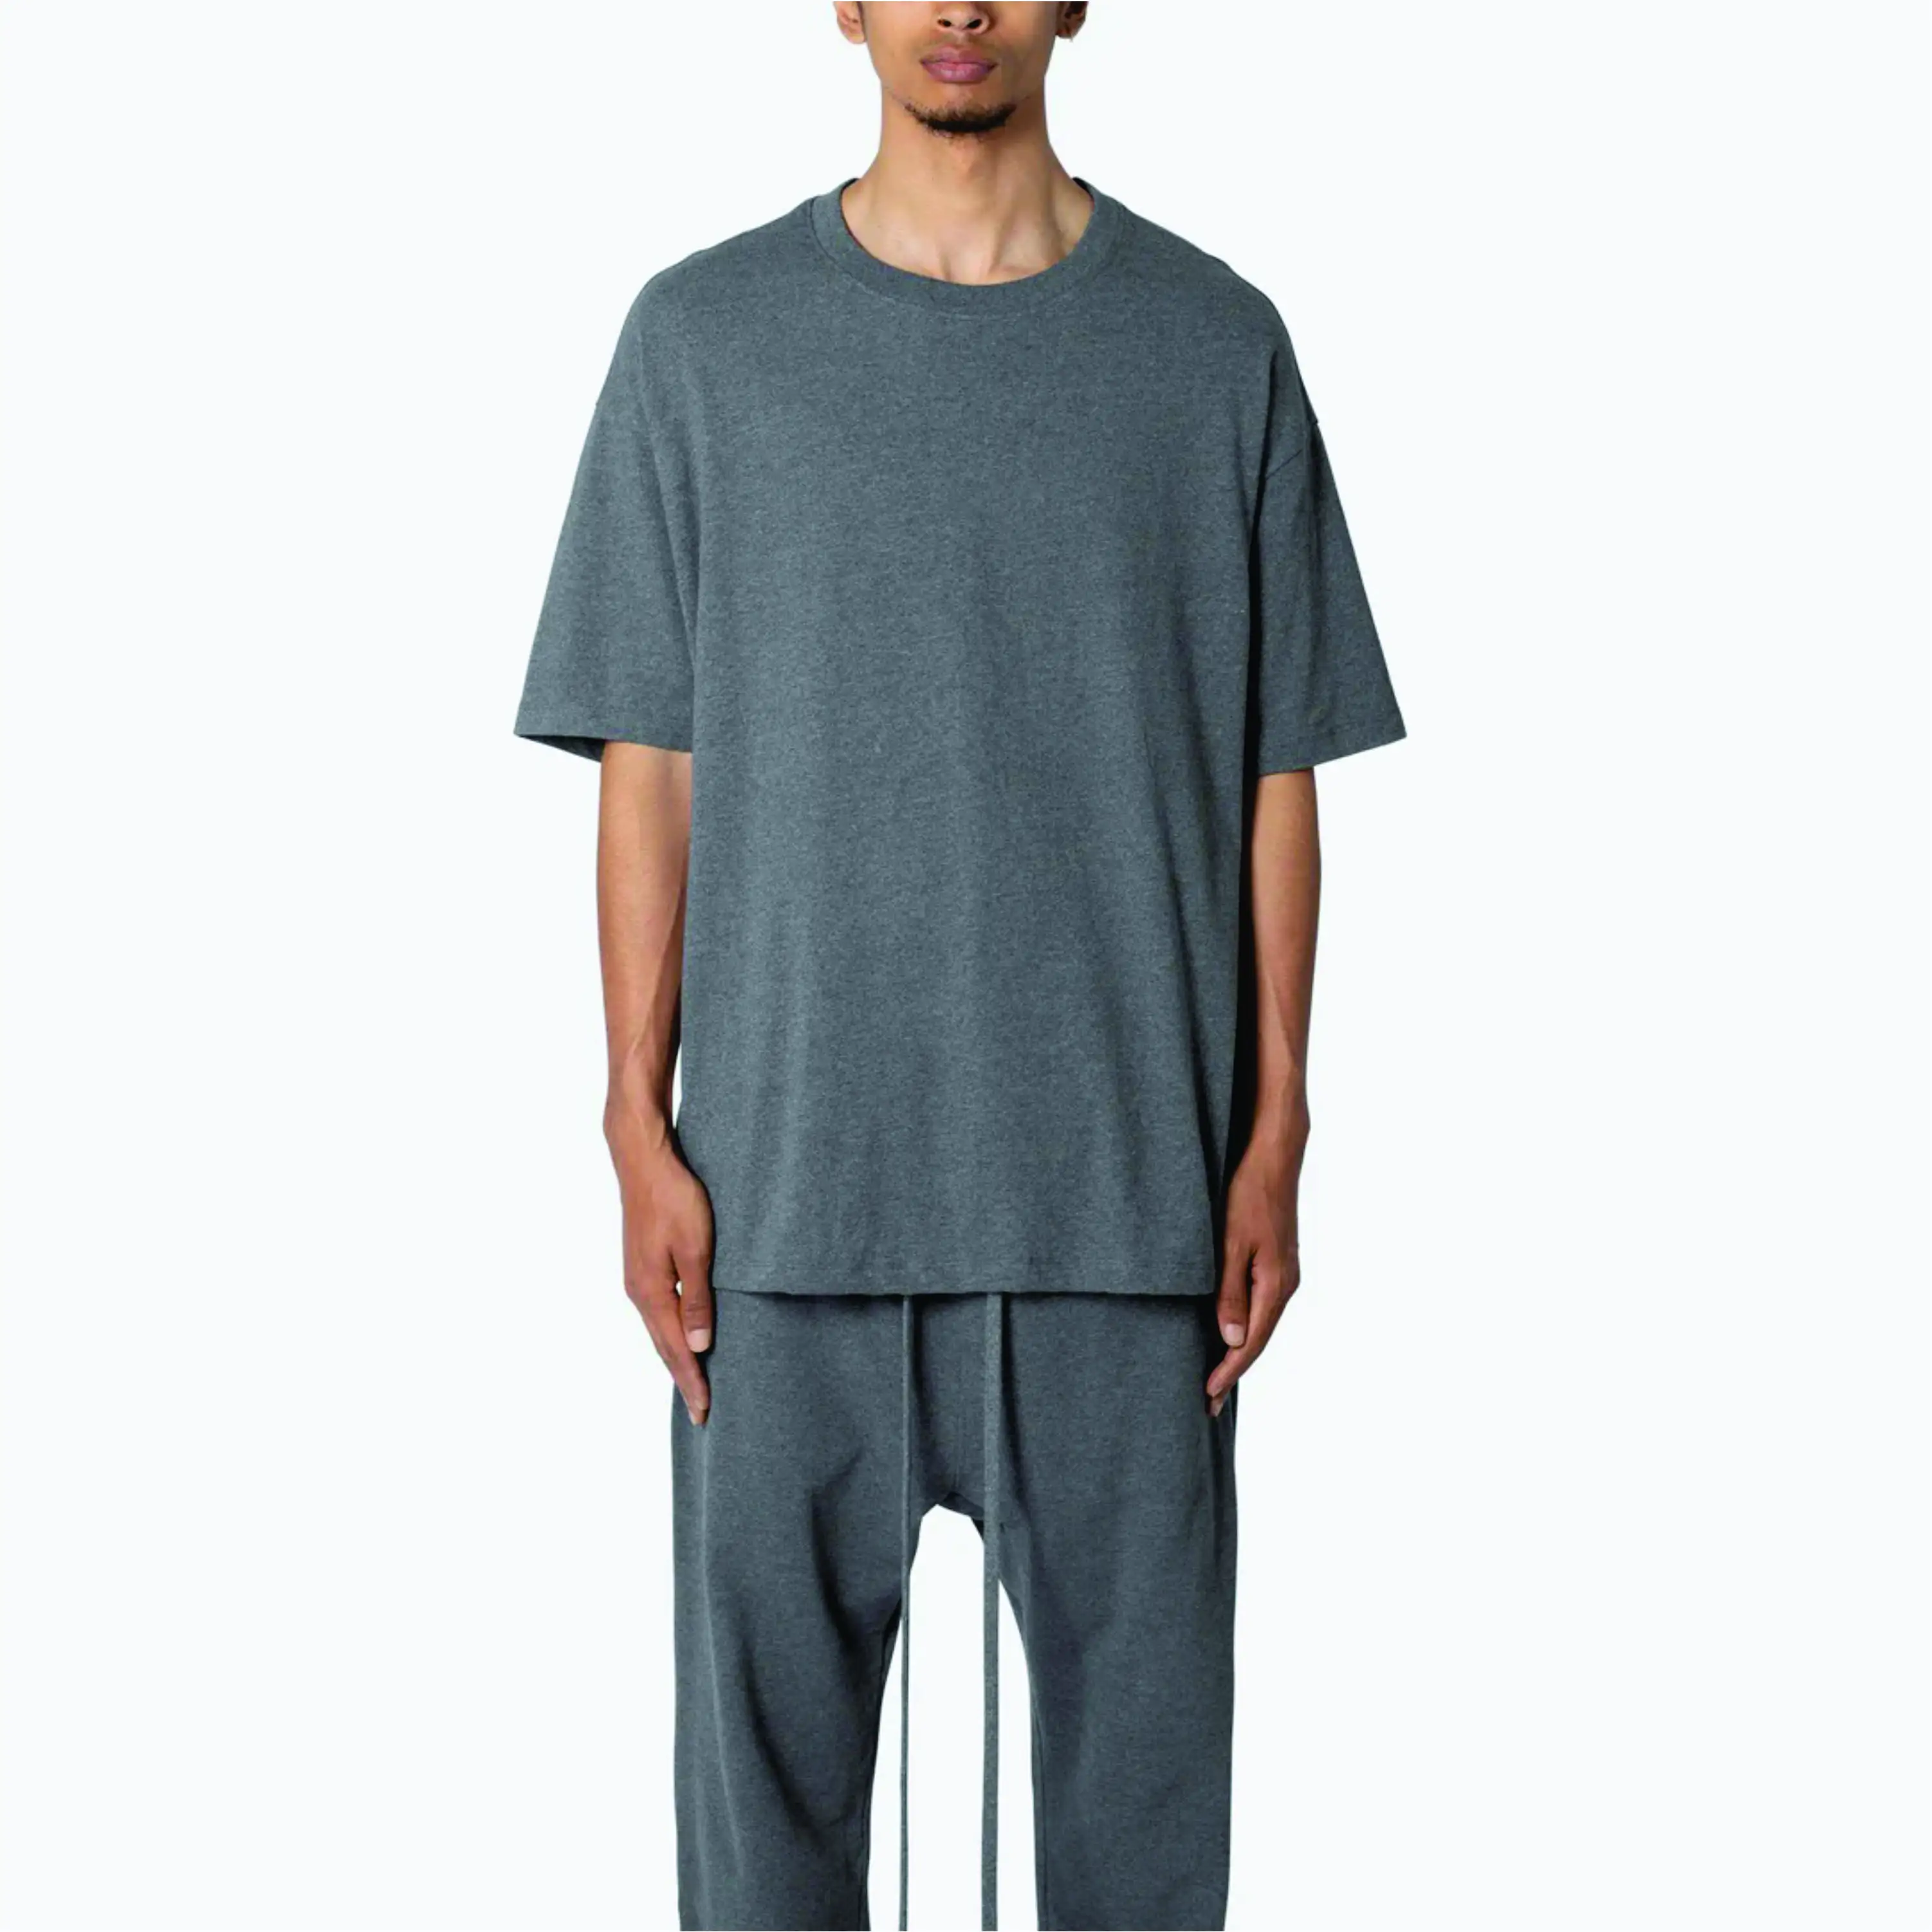 Wholesale Hemp Clothing Manufacturer Custom Half Sleeve Tshirts Relaxed Fit 100% Organic Hemp Fabric Cotton T Shirt for Men